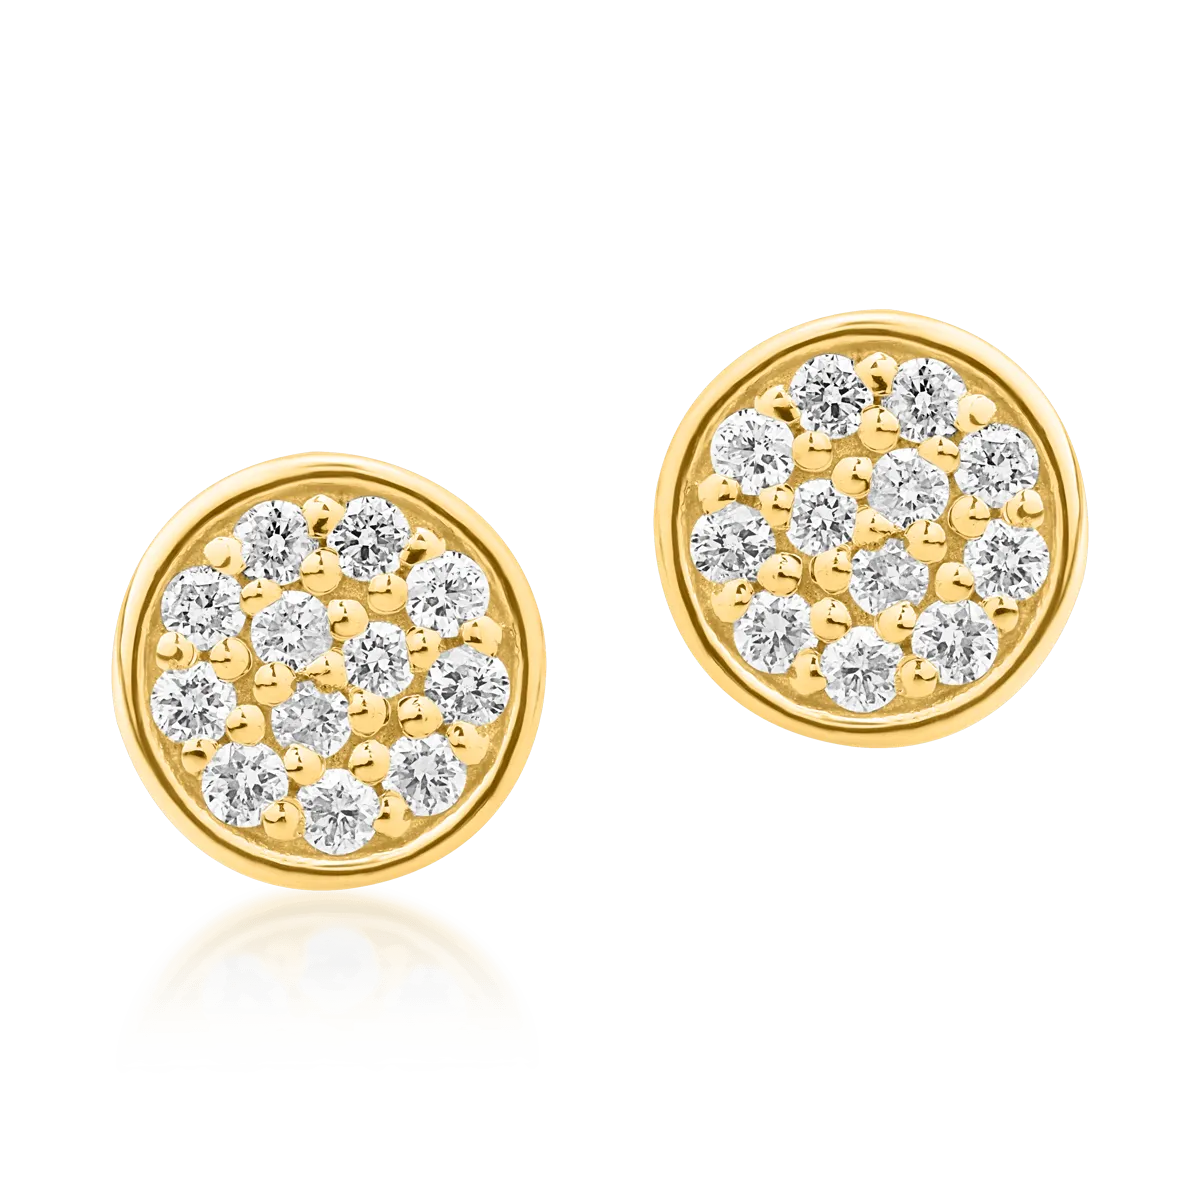 14K yellow gold earrings with 0.135ct diamonds